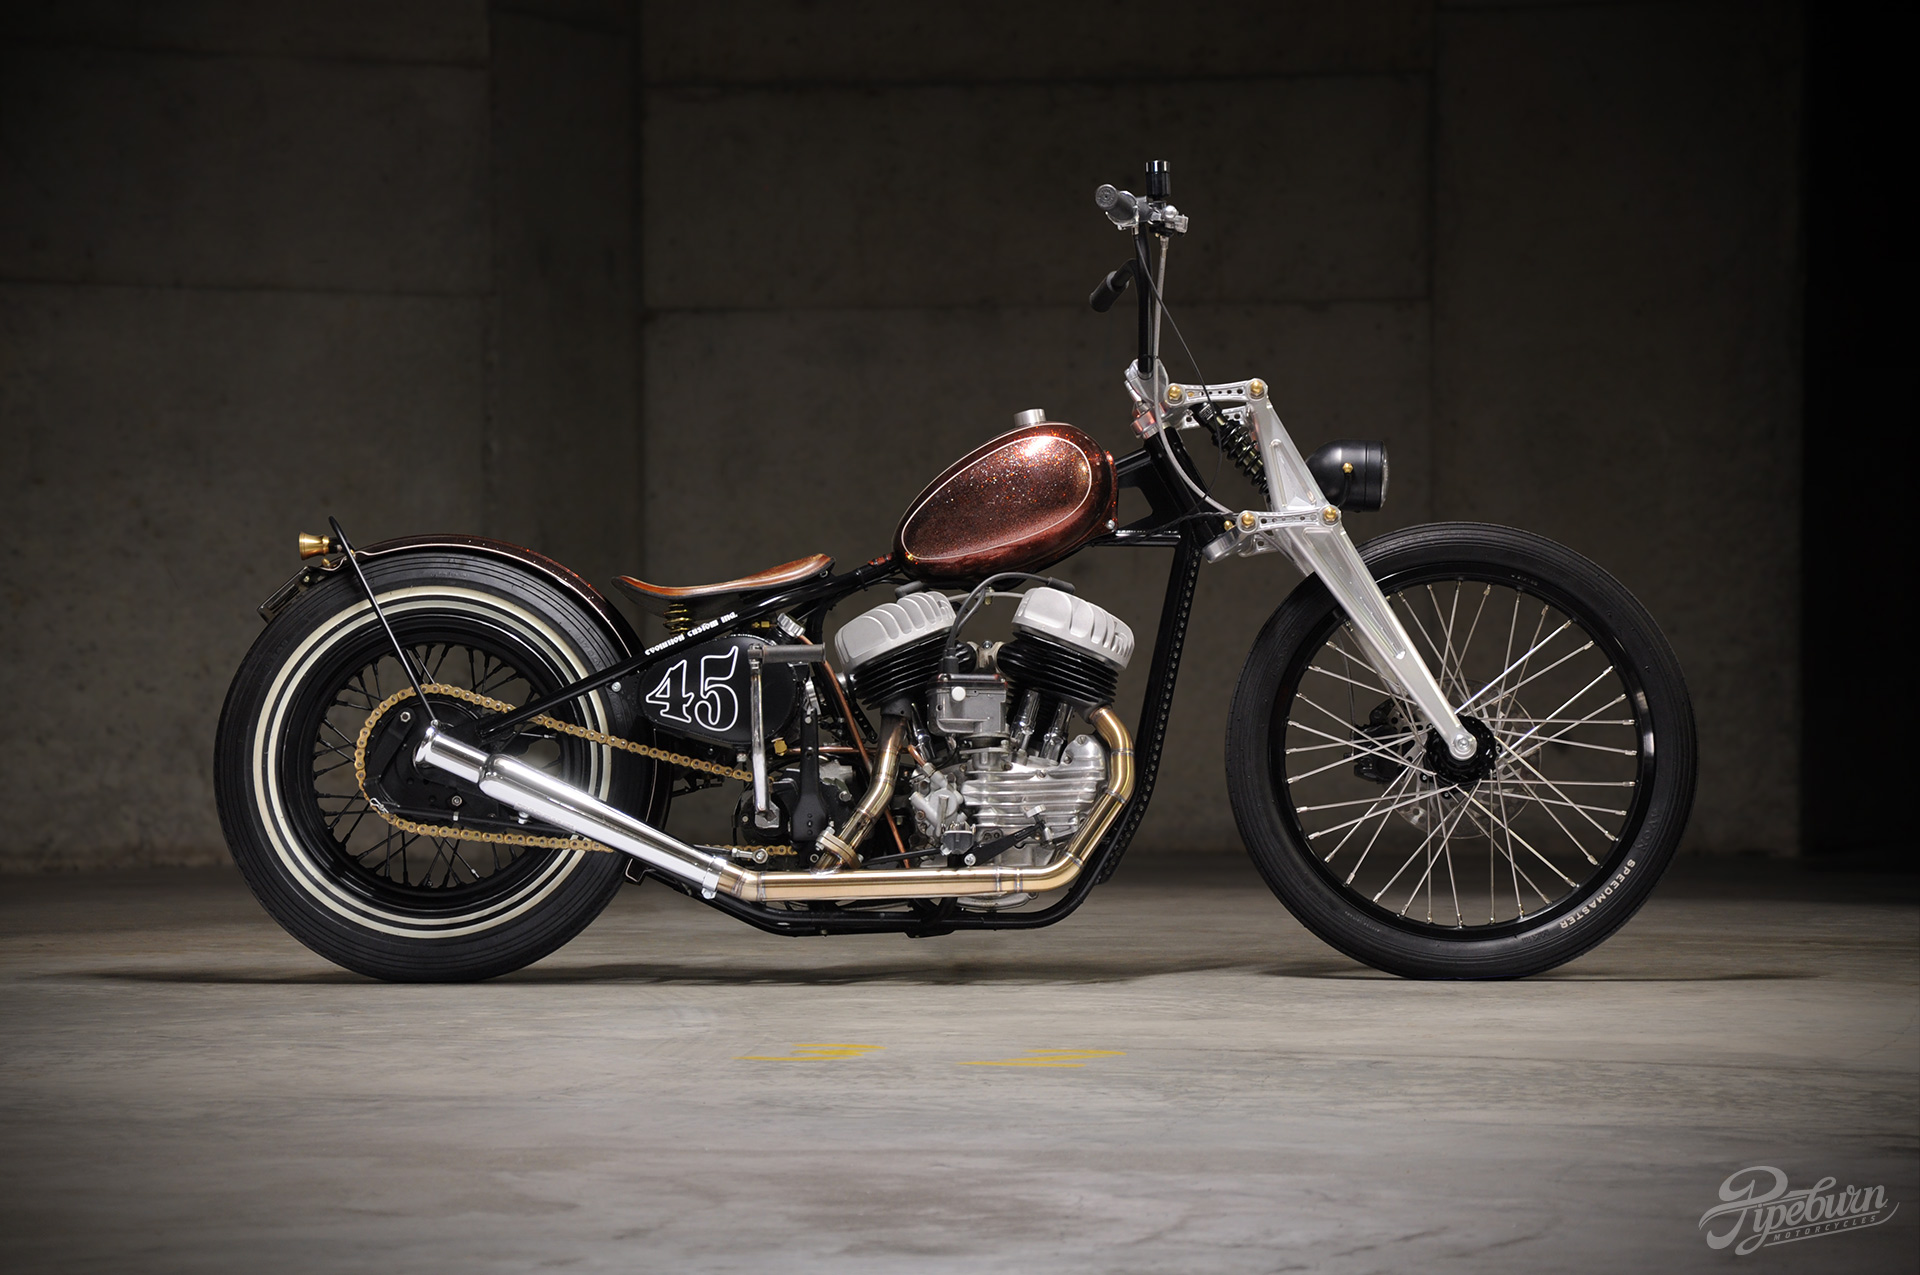 Harley Davidson Wallpaper High Definition